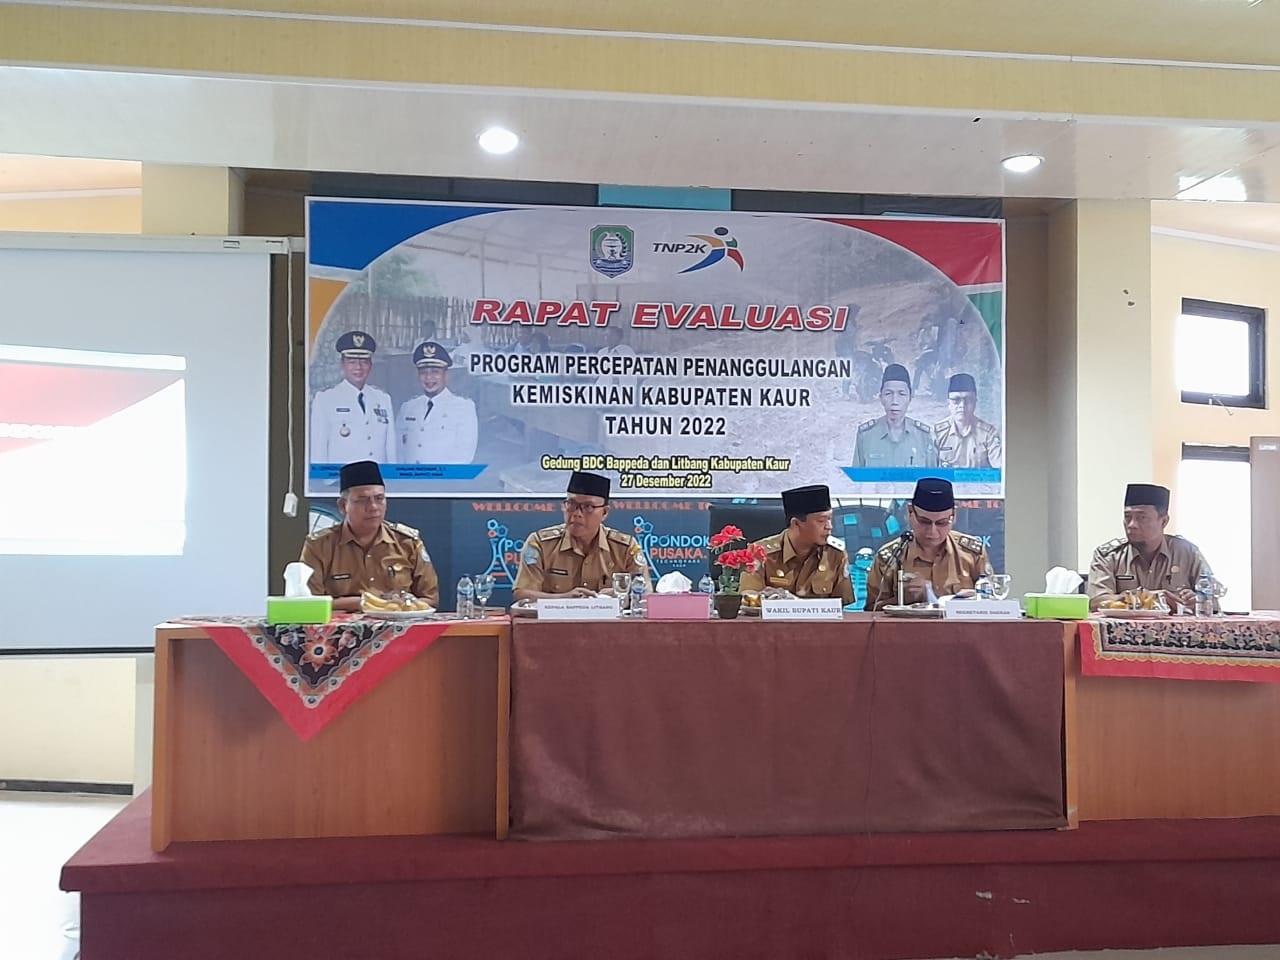 Ternyata, Program BPNT, BSM, PKH di Kaur Belum Berdampak, Kemiskinan Kaur di Atas Rerata Provinsi Bengkulu